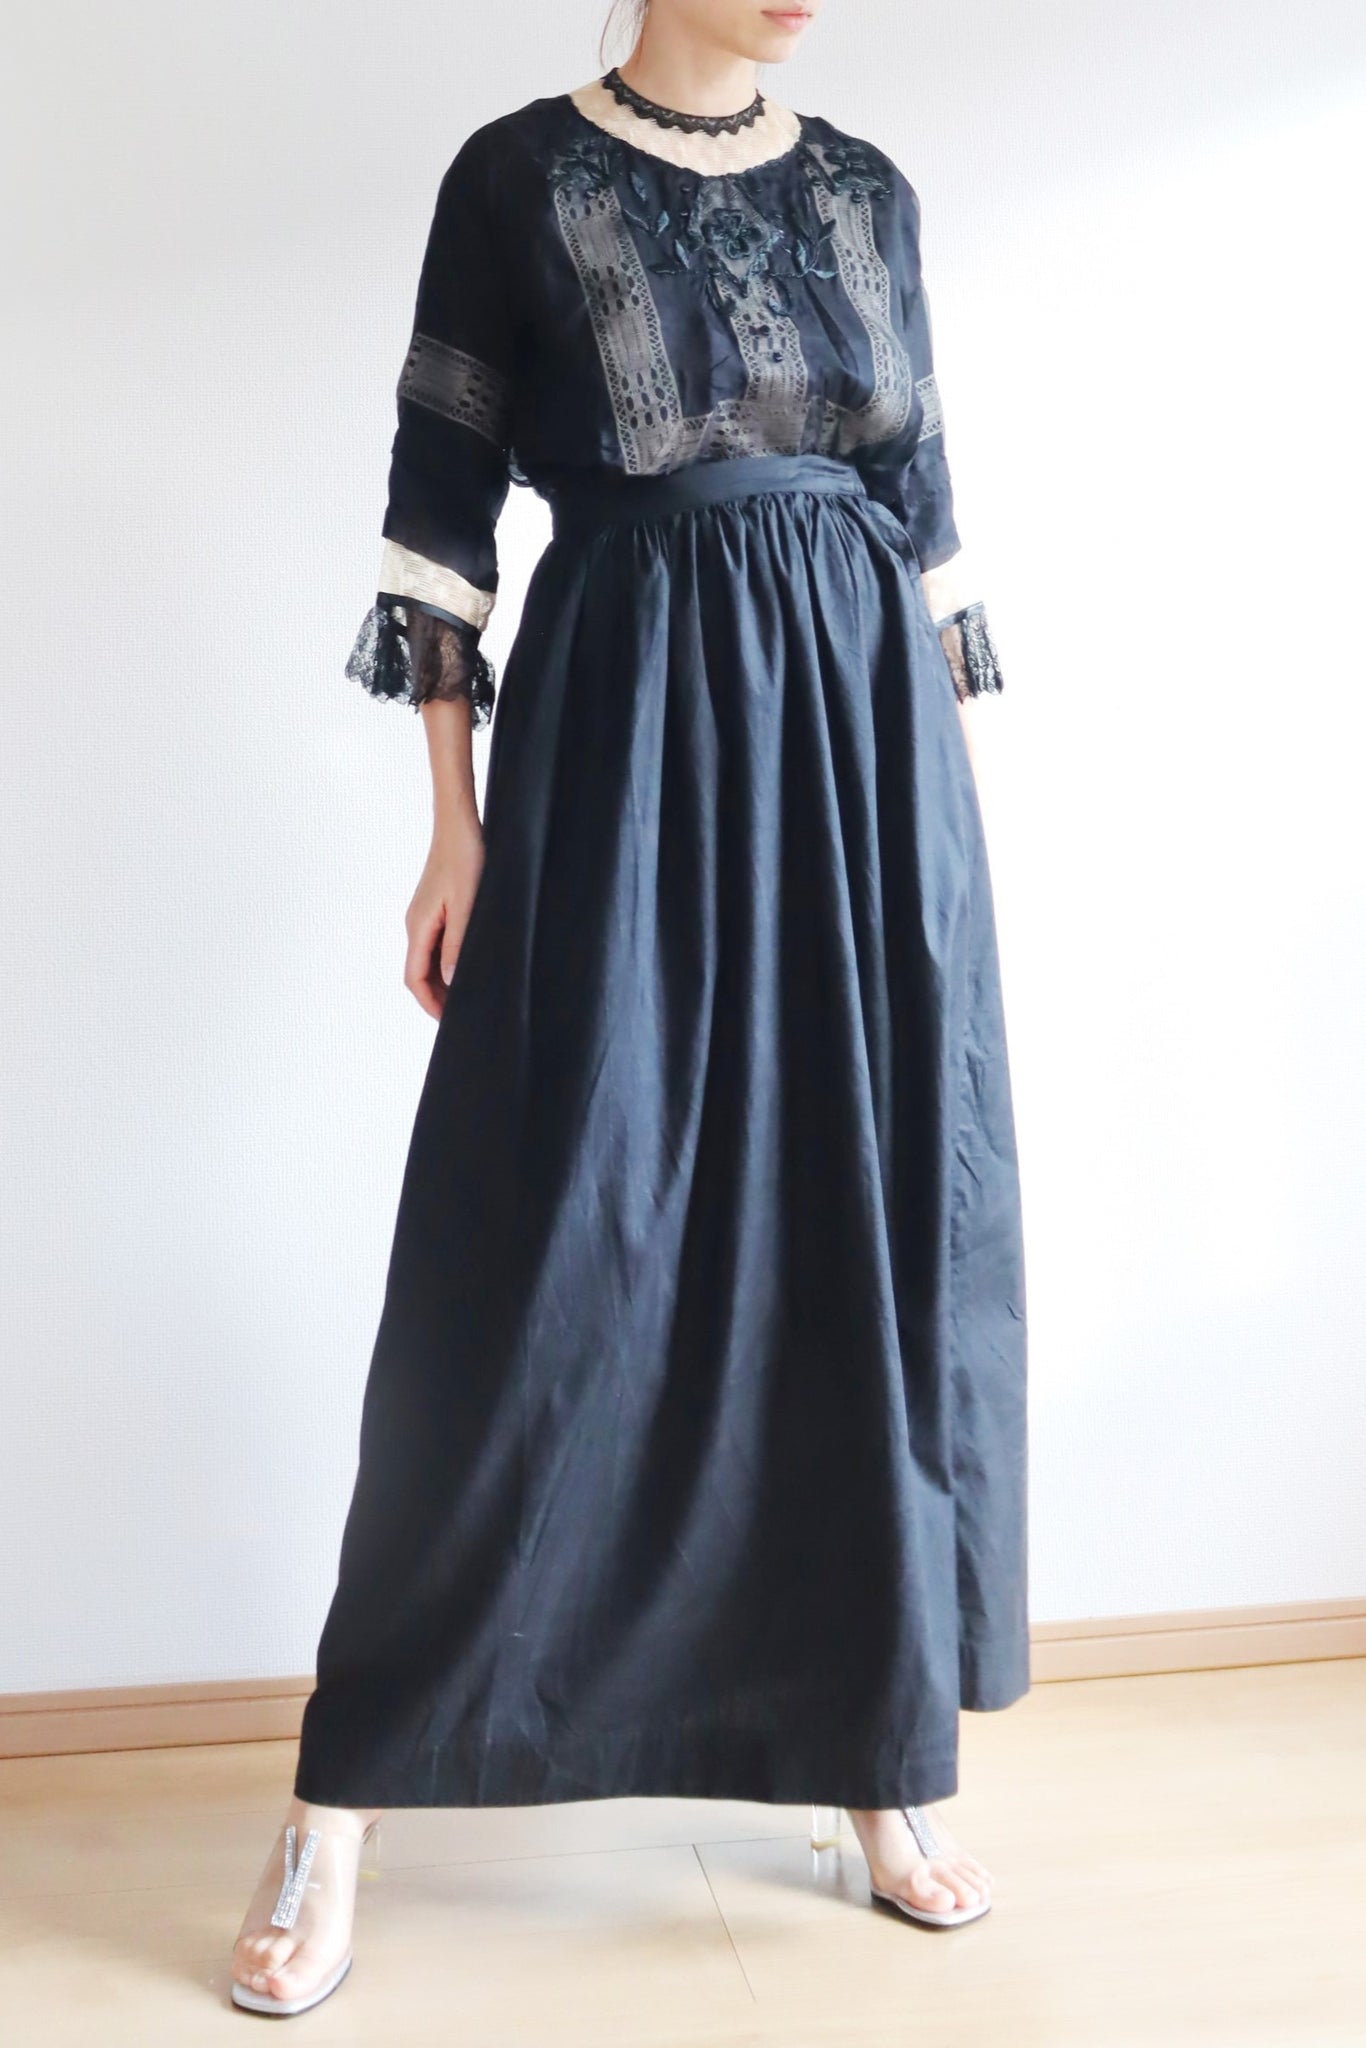 1900s Edwardian Black Cotton Petticoat Skirt